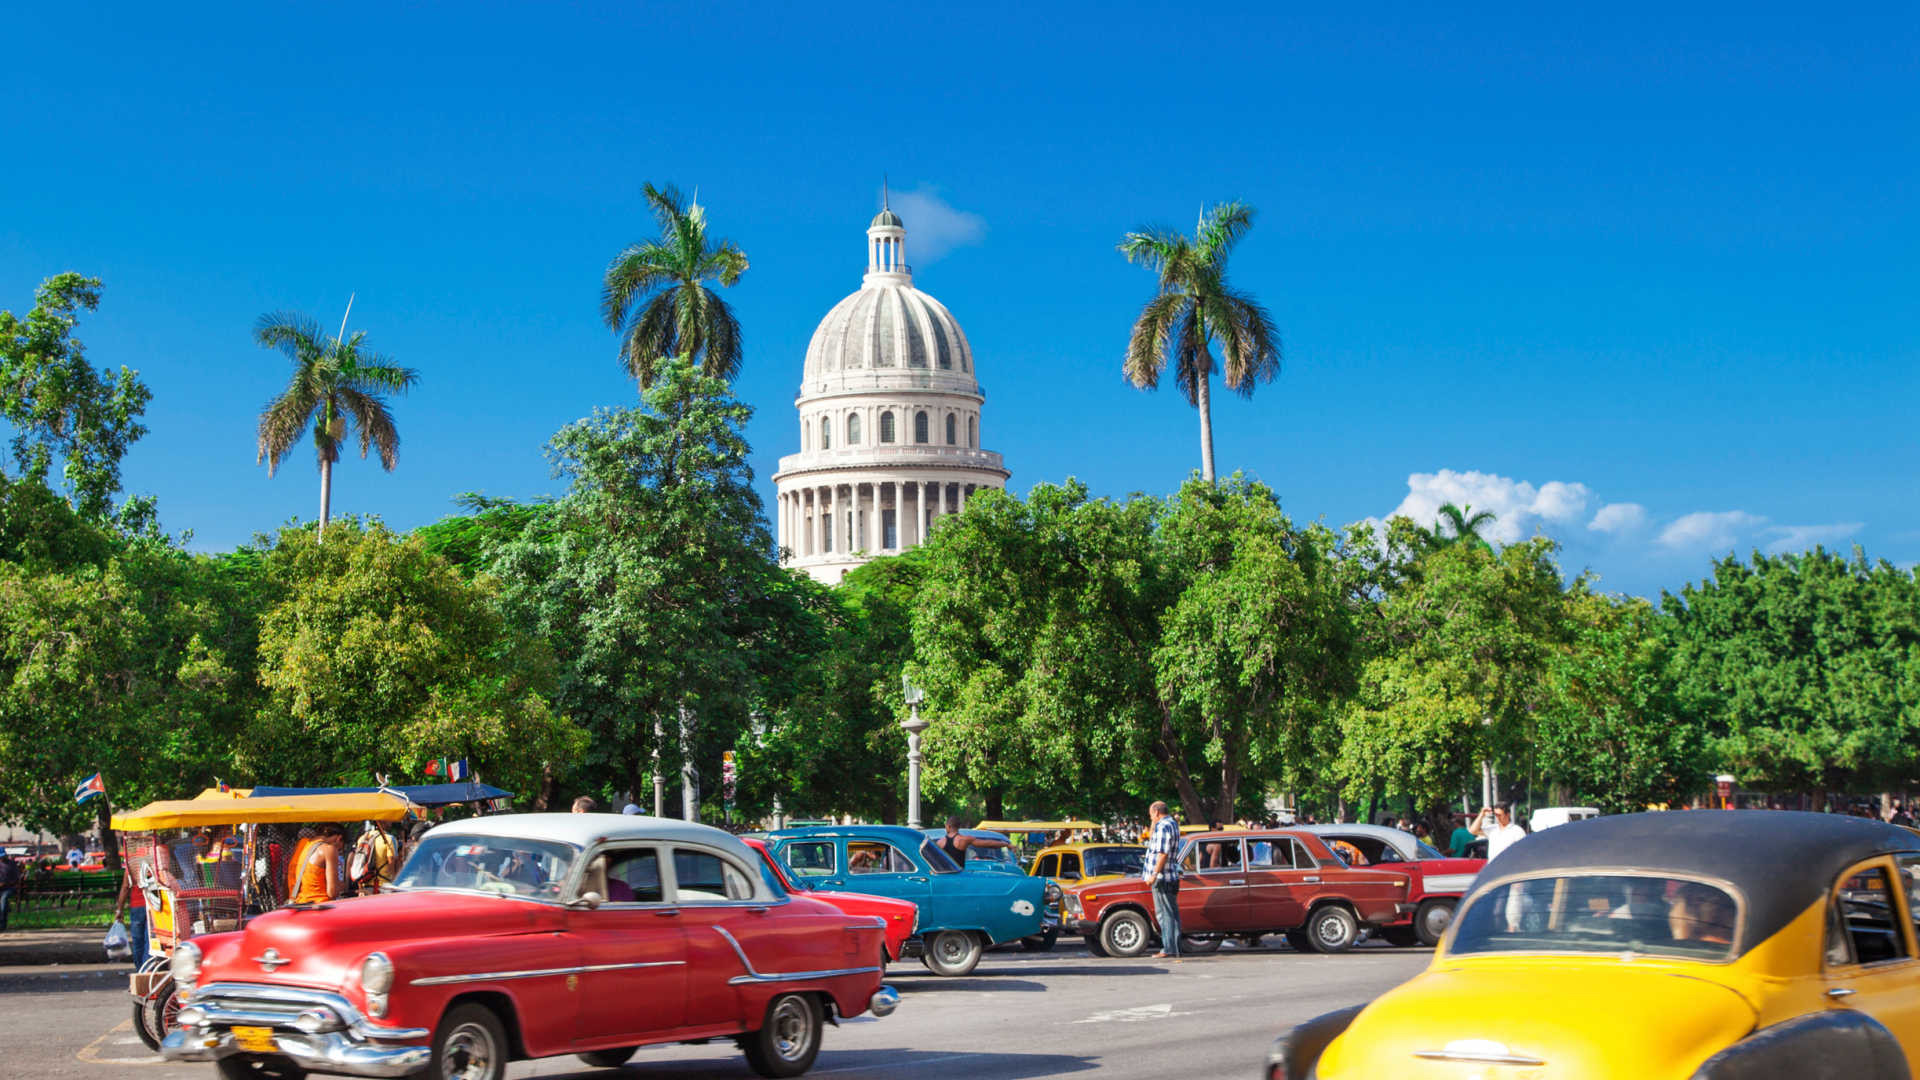 1920x1080 Cuba holidays